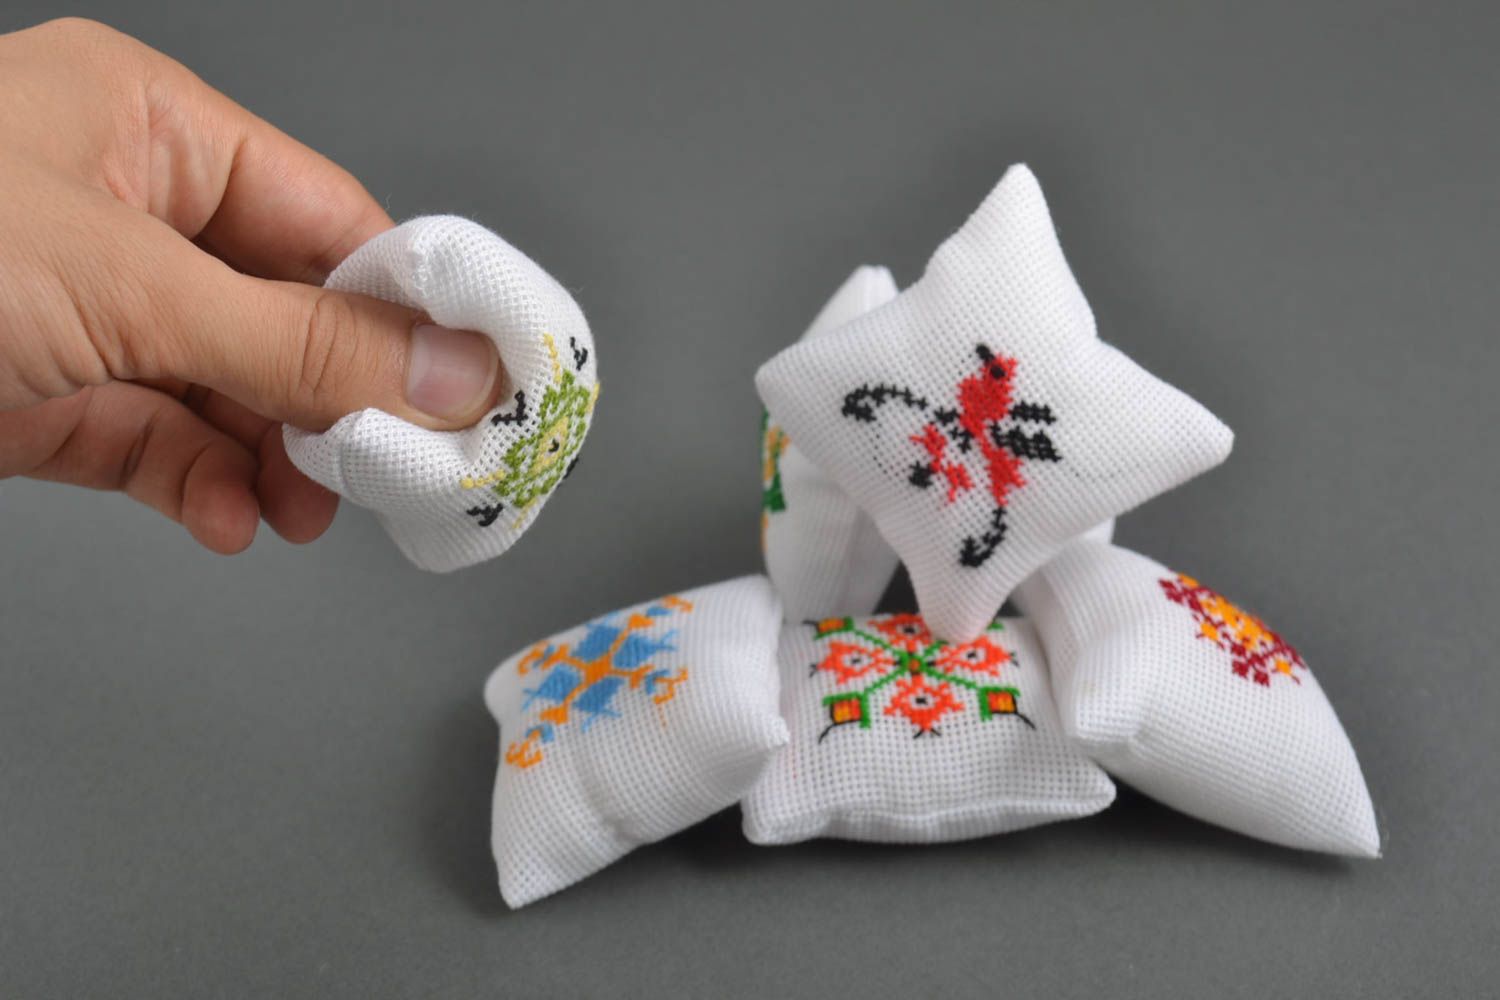 Handmade pincushions embroidery supplies 7 pin cushions needle holders gift idea photo 3